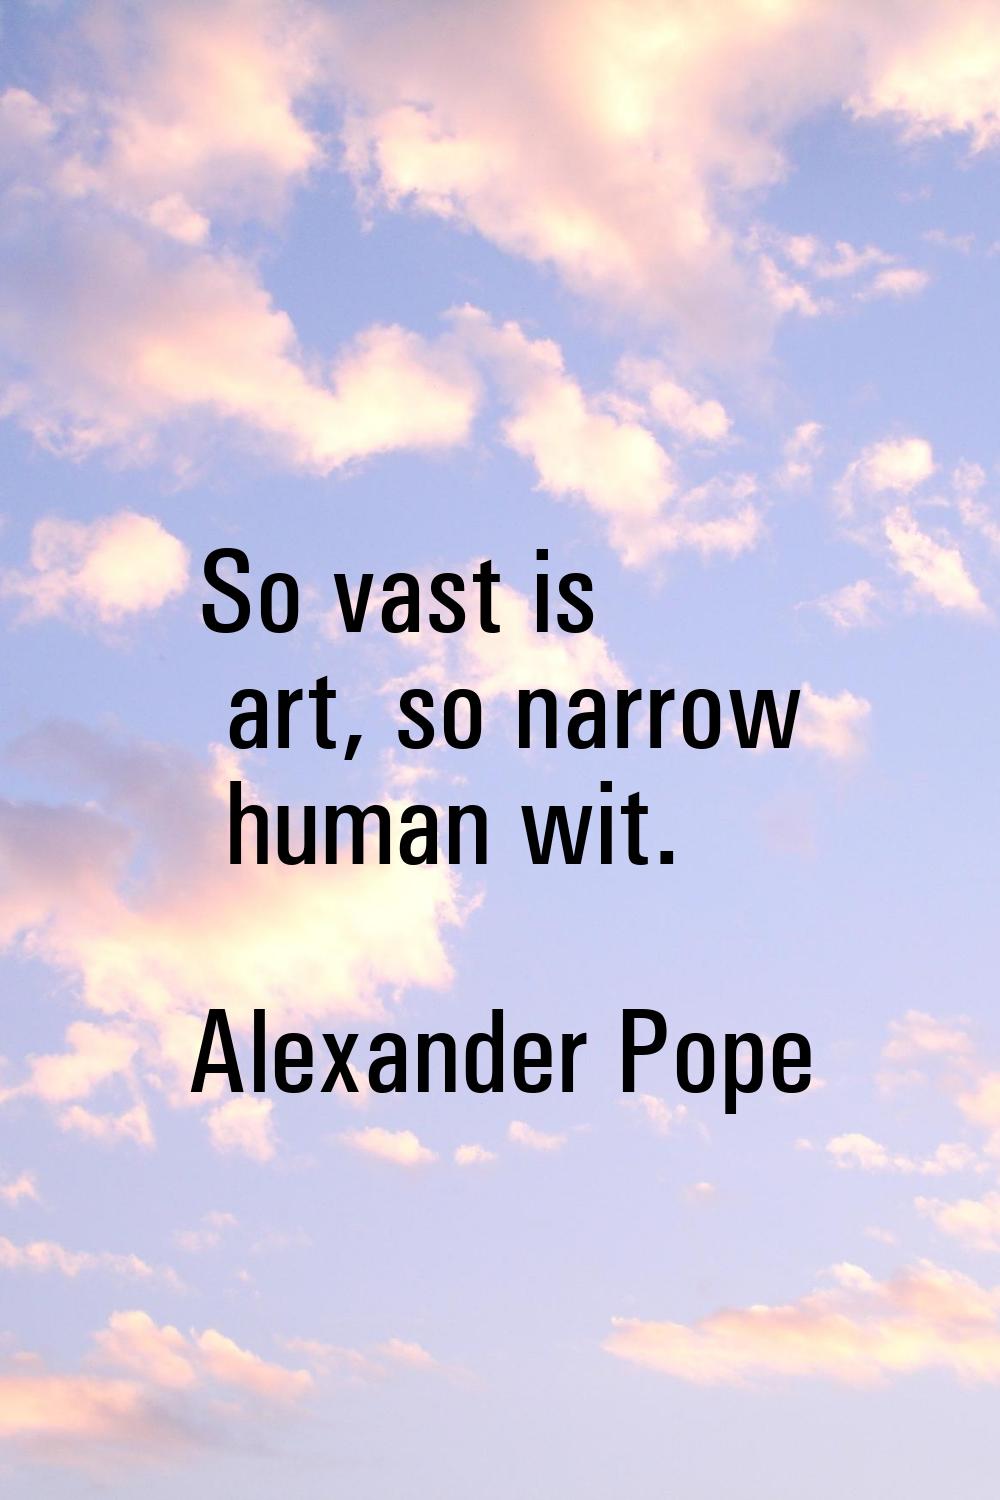 So vast is art, so narrow human wit.